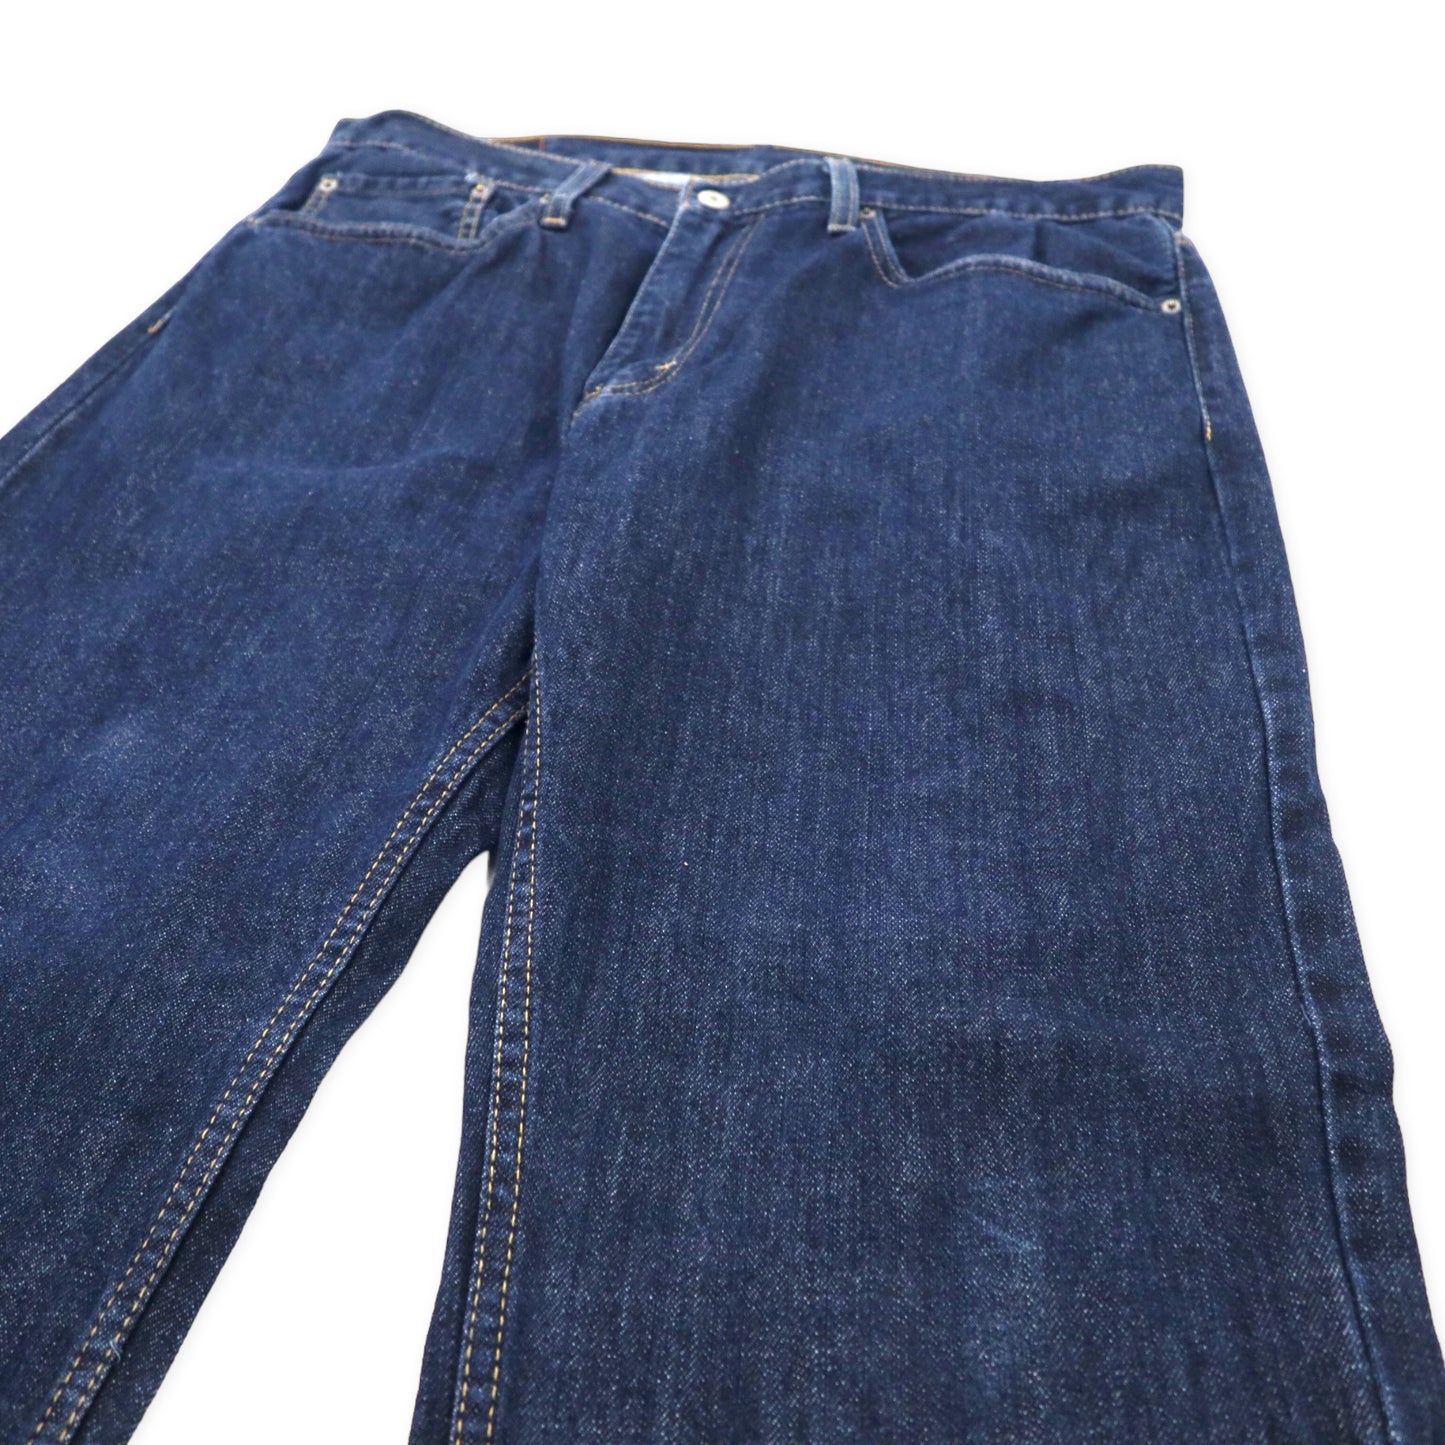 Levi's 559 デニムパンツ 36 ブルー 濃紺 Loose Straight Leg Dark Blue Relaxed Denim Jeans 559-4010